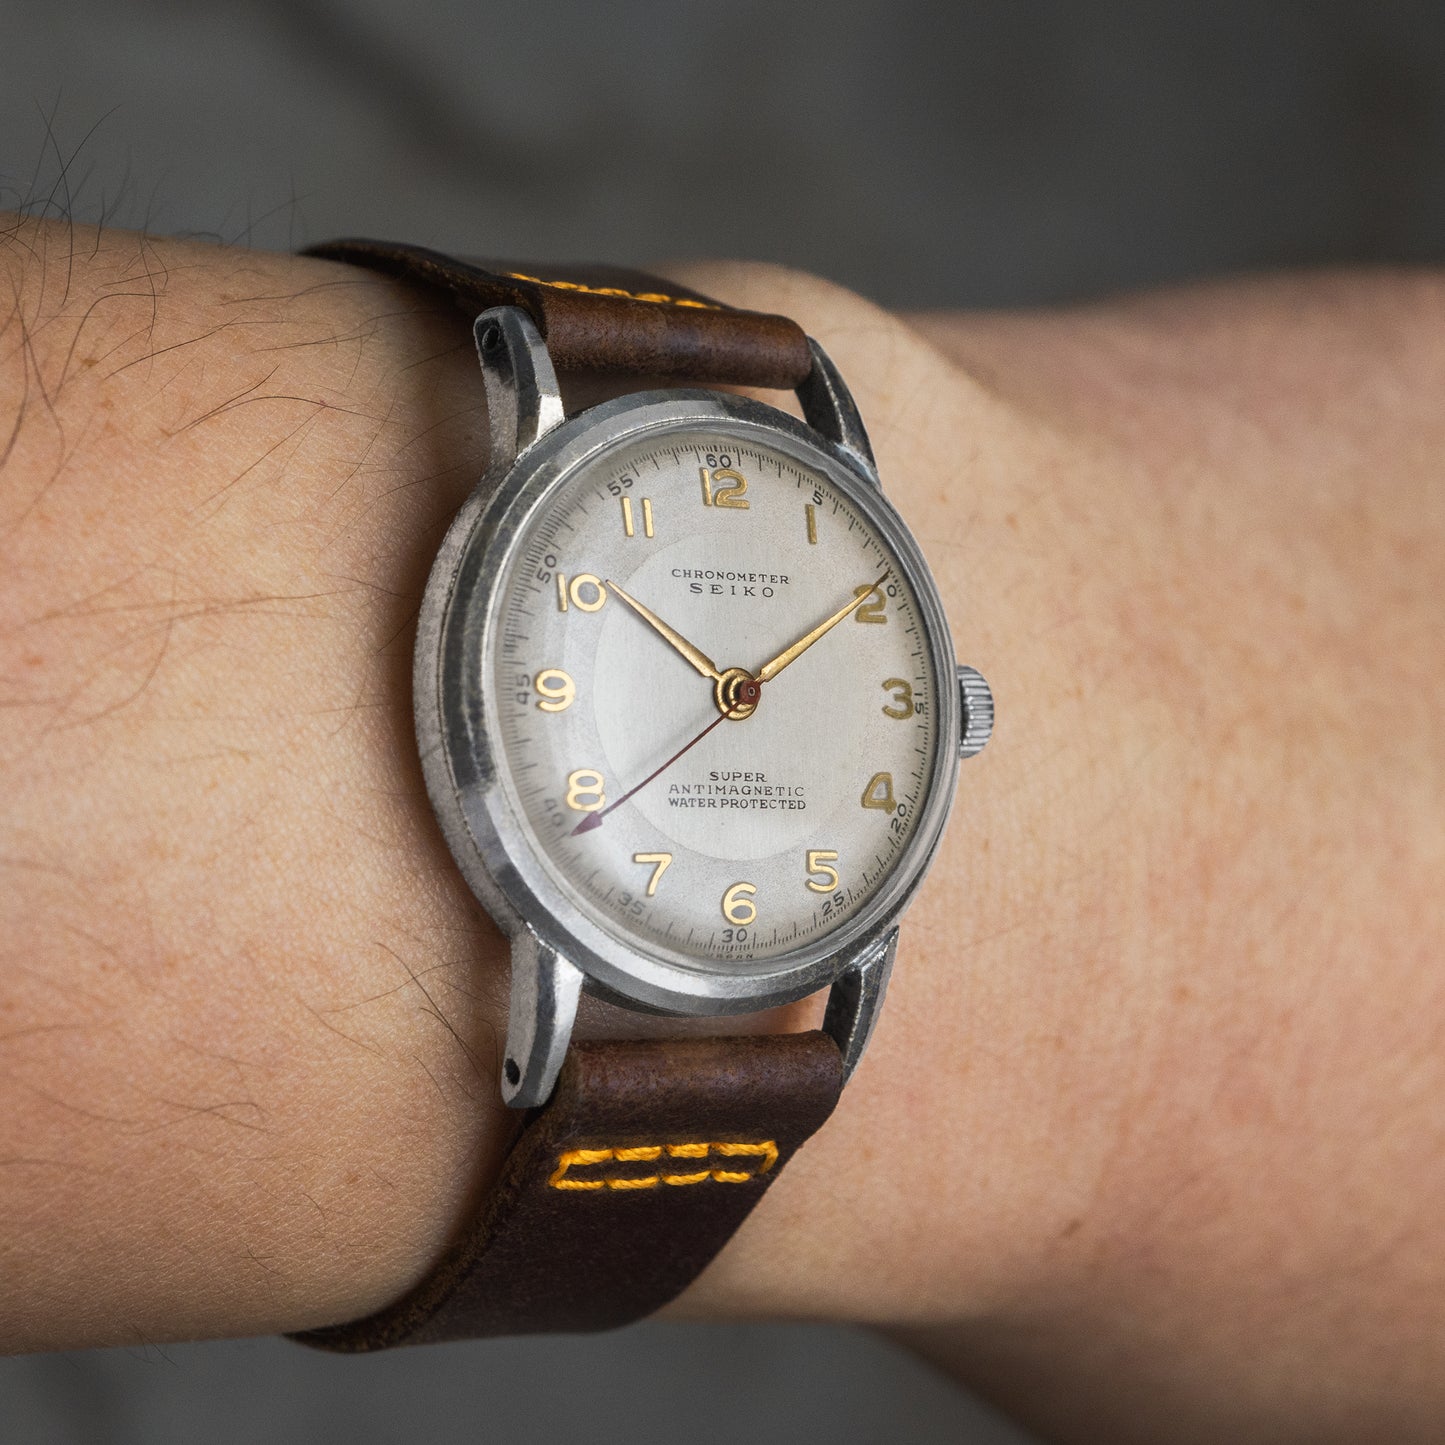 No. 484 / Seiko Super Chronometer - 1954 – From Time To Times